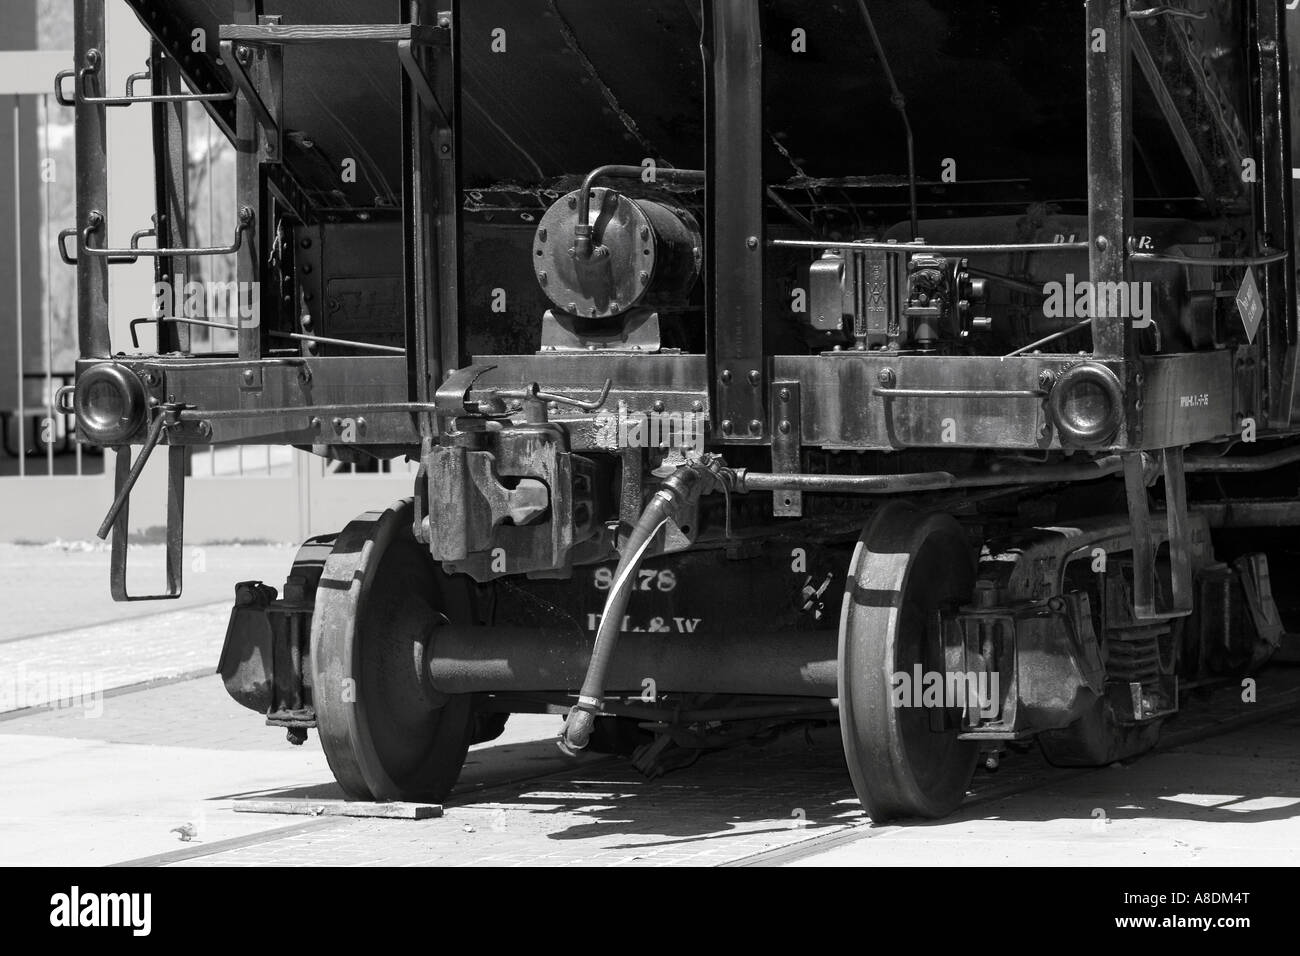 Running gear of a railroad coal car. Stock Photo